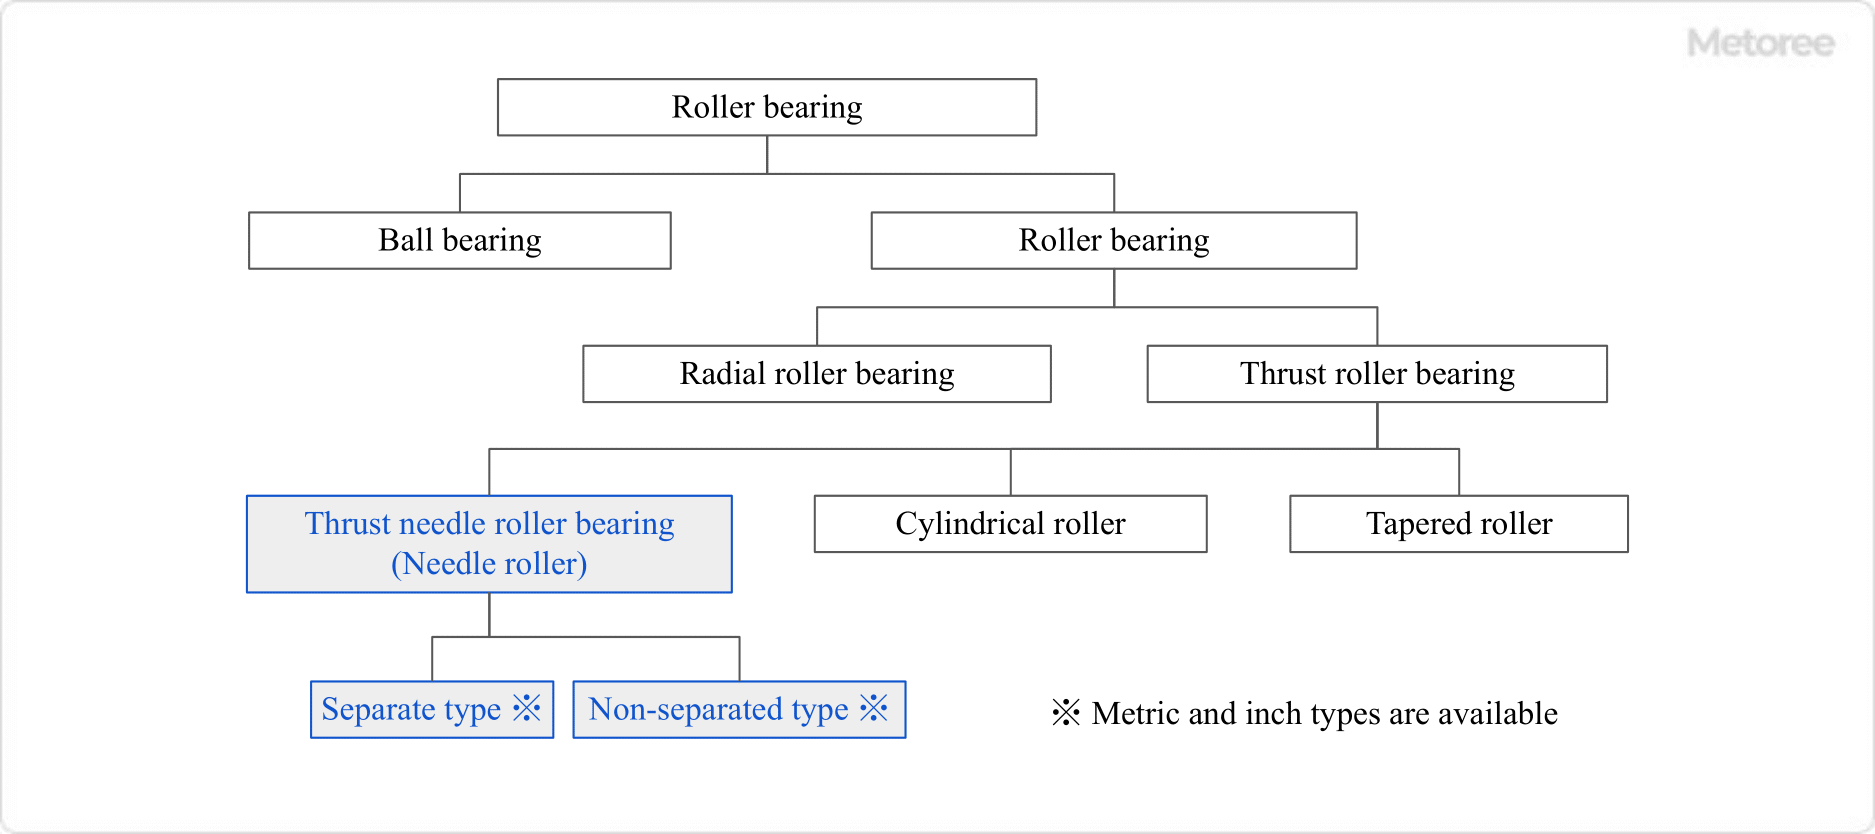 Figure 4. Bearing type system